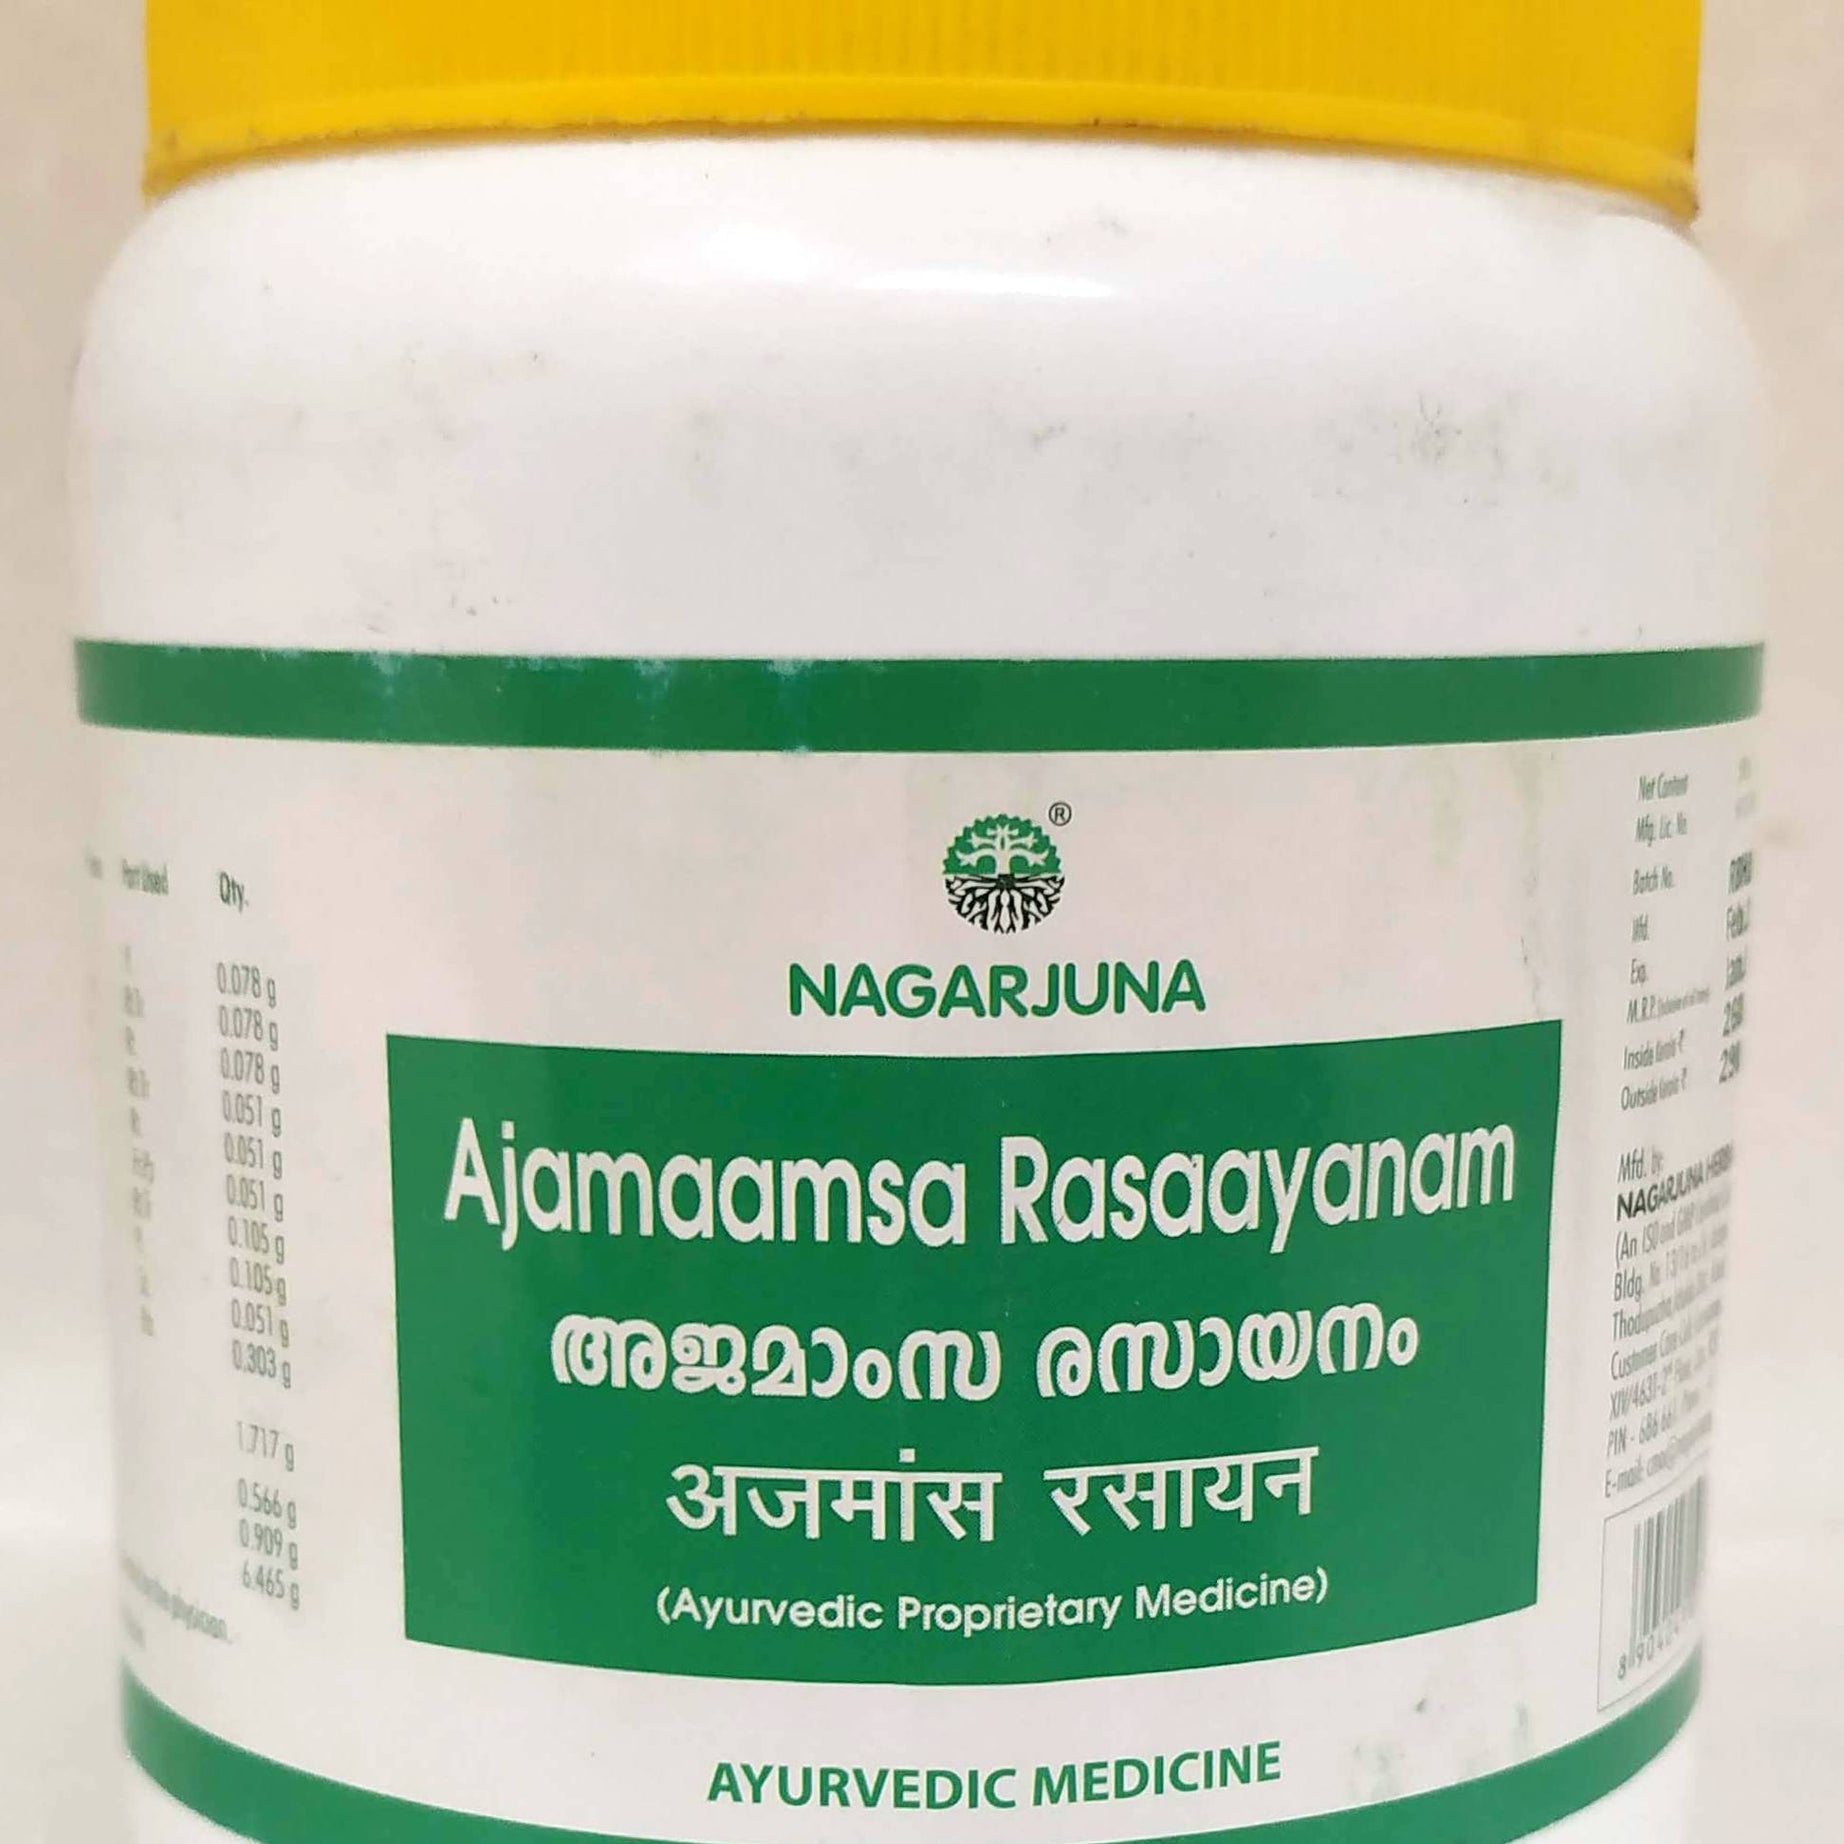 Shop Nagarjuna Ajamaamsa Rasayanam 500gm at price 260.00 from Nagarjuna Online - Ayush Care